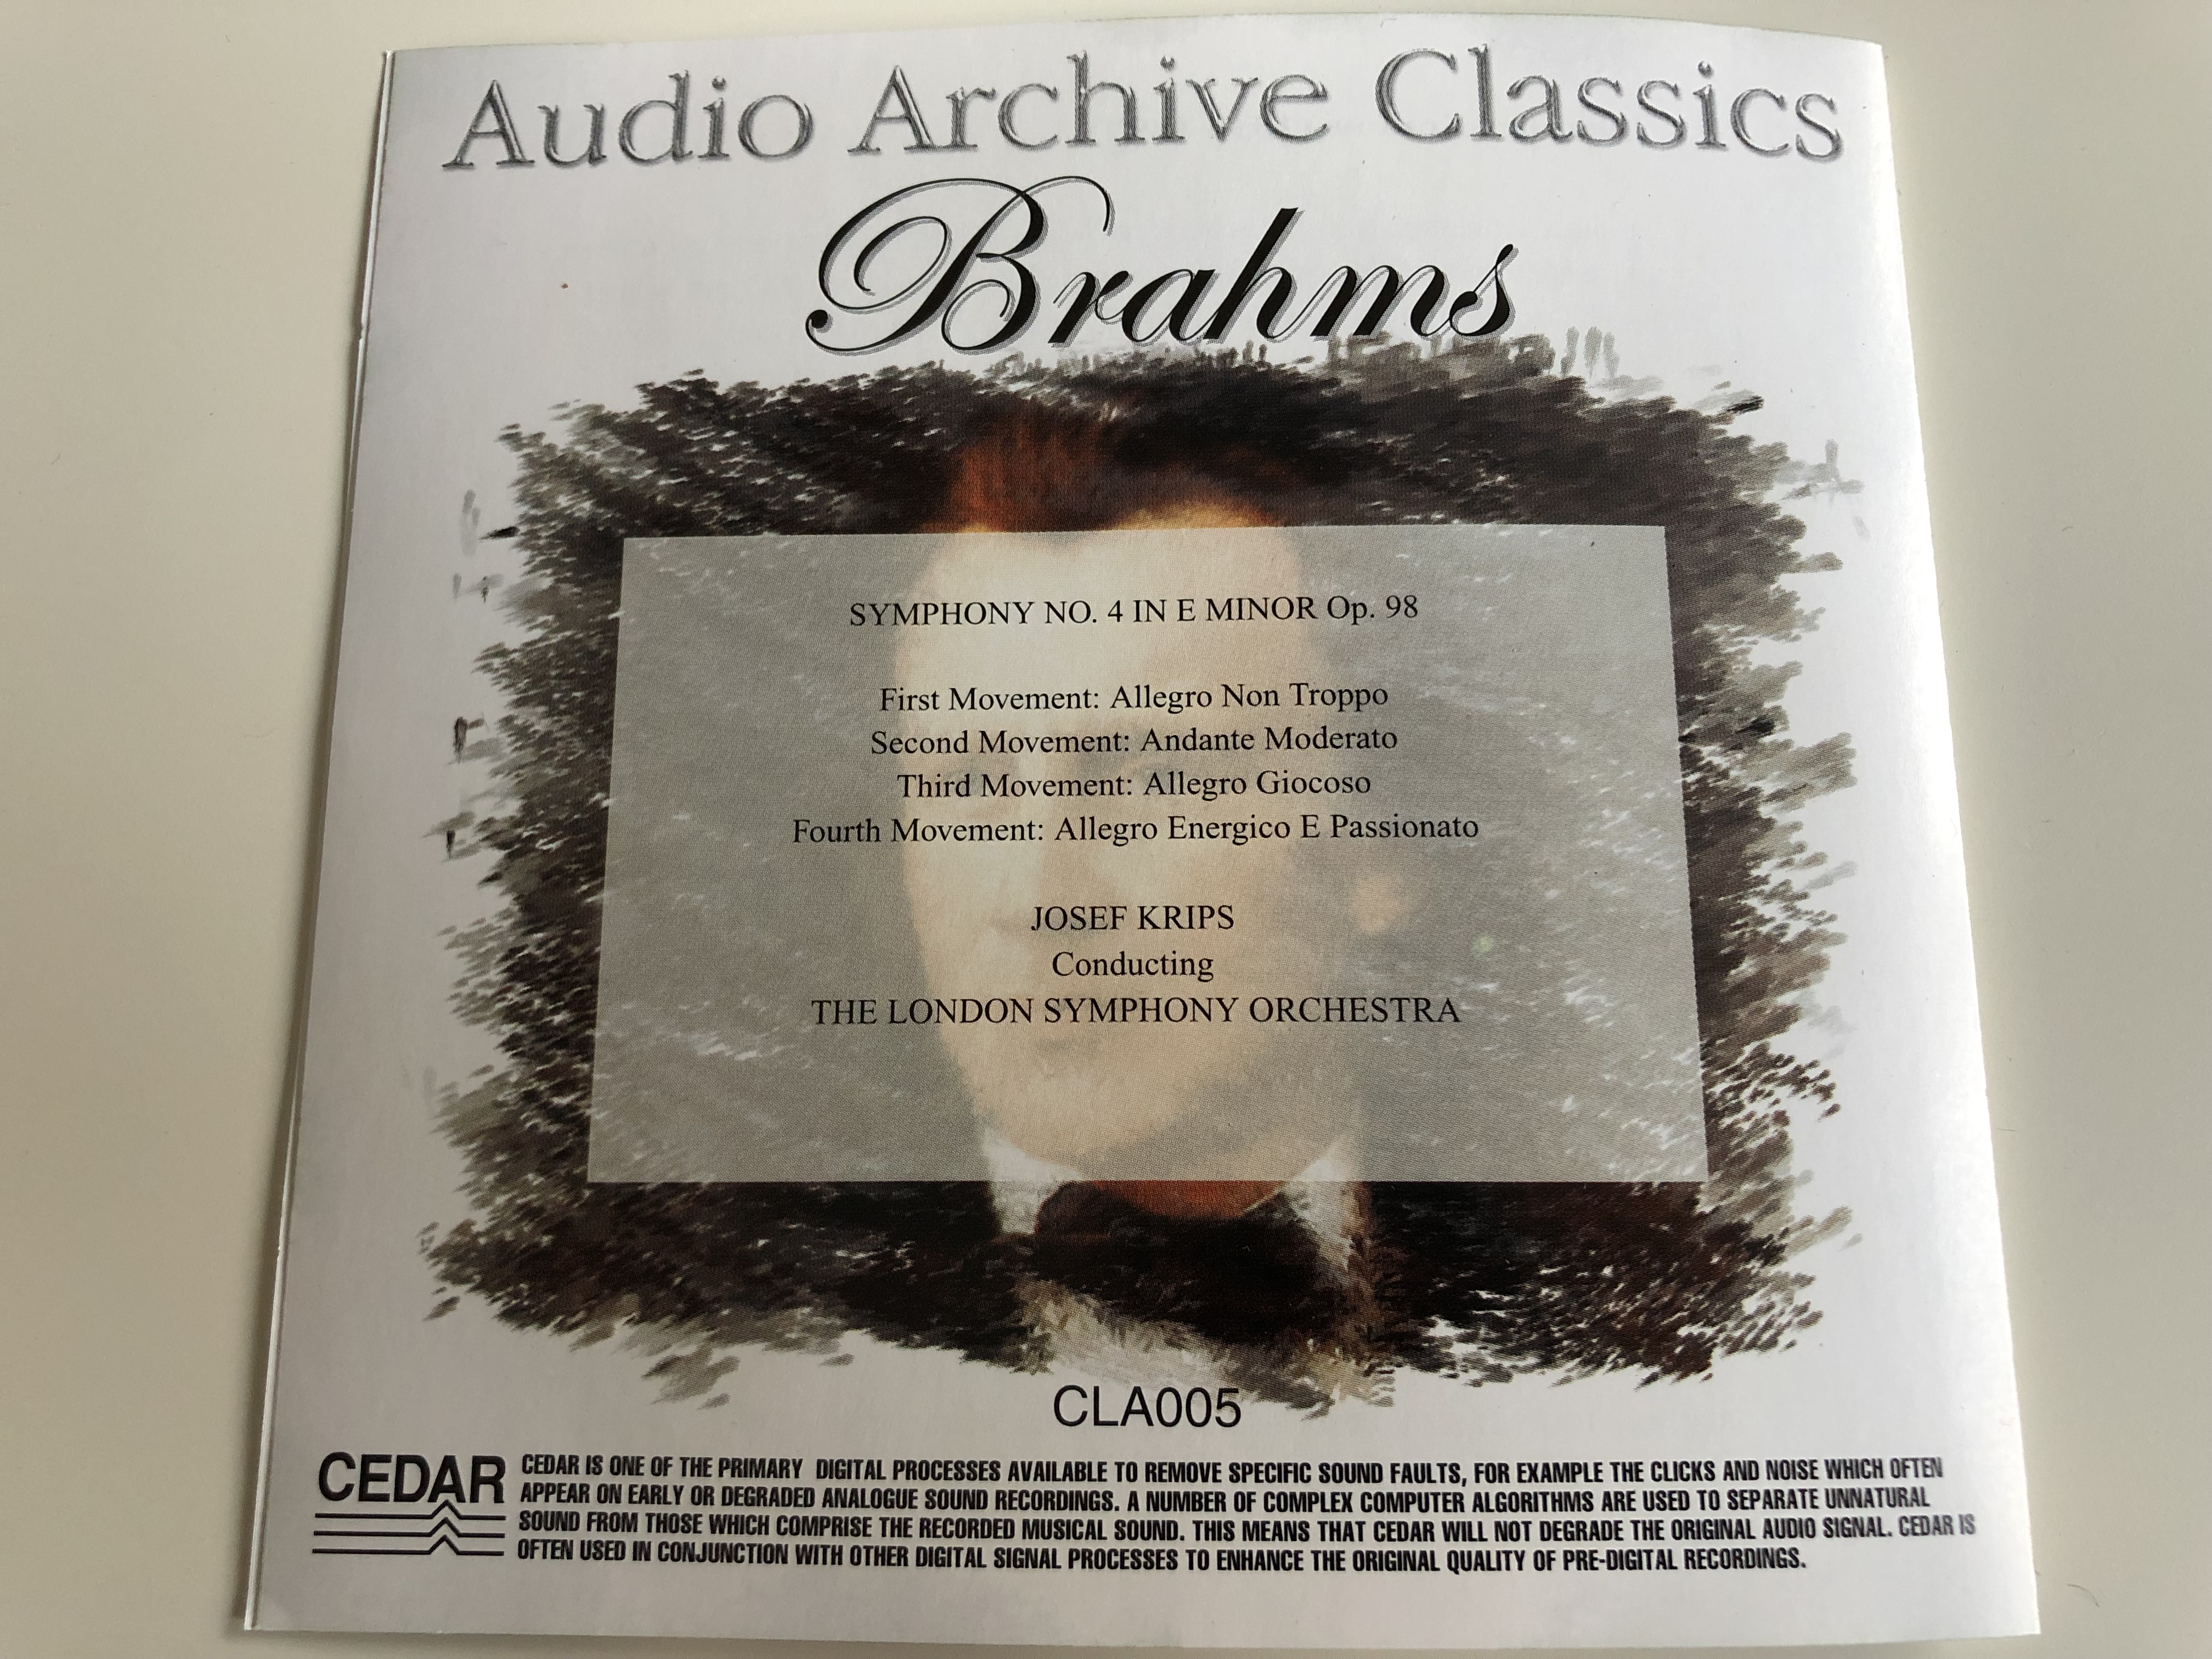 brahms-audio-archive-classicsimg-40461.jpg